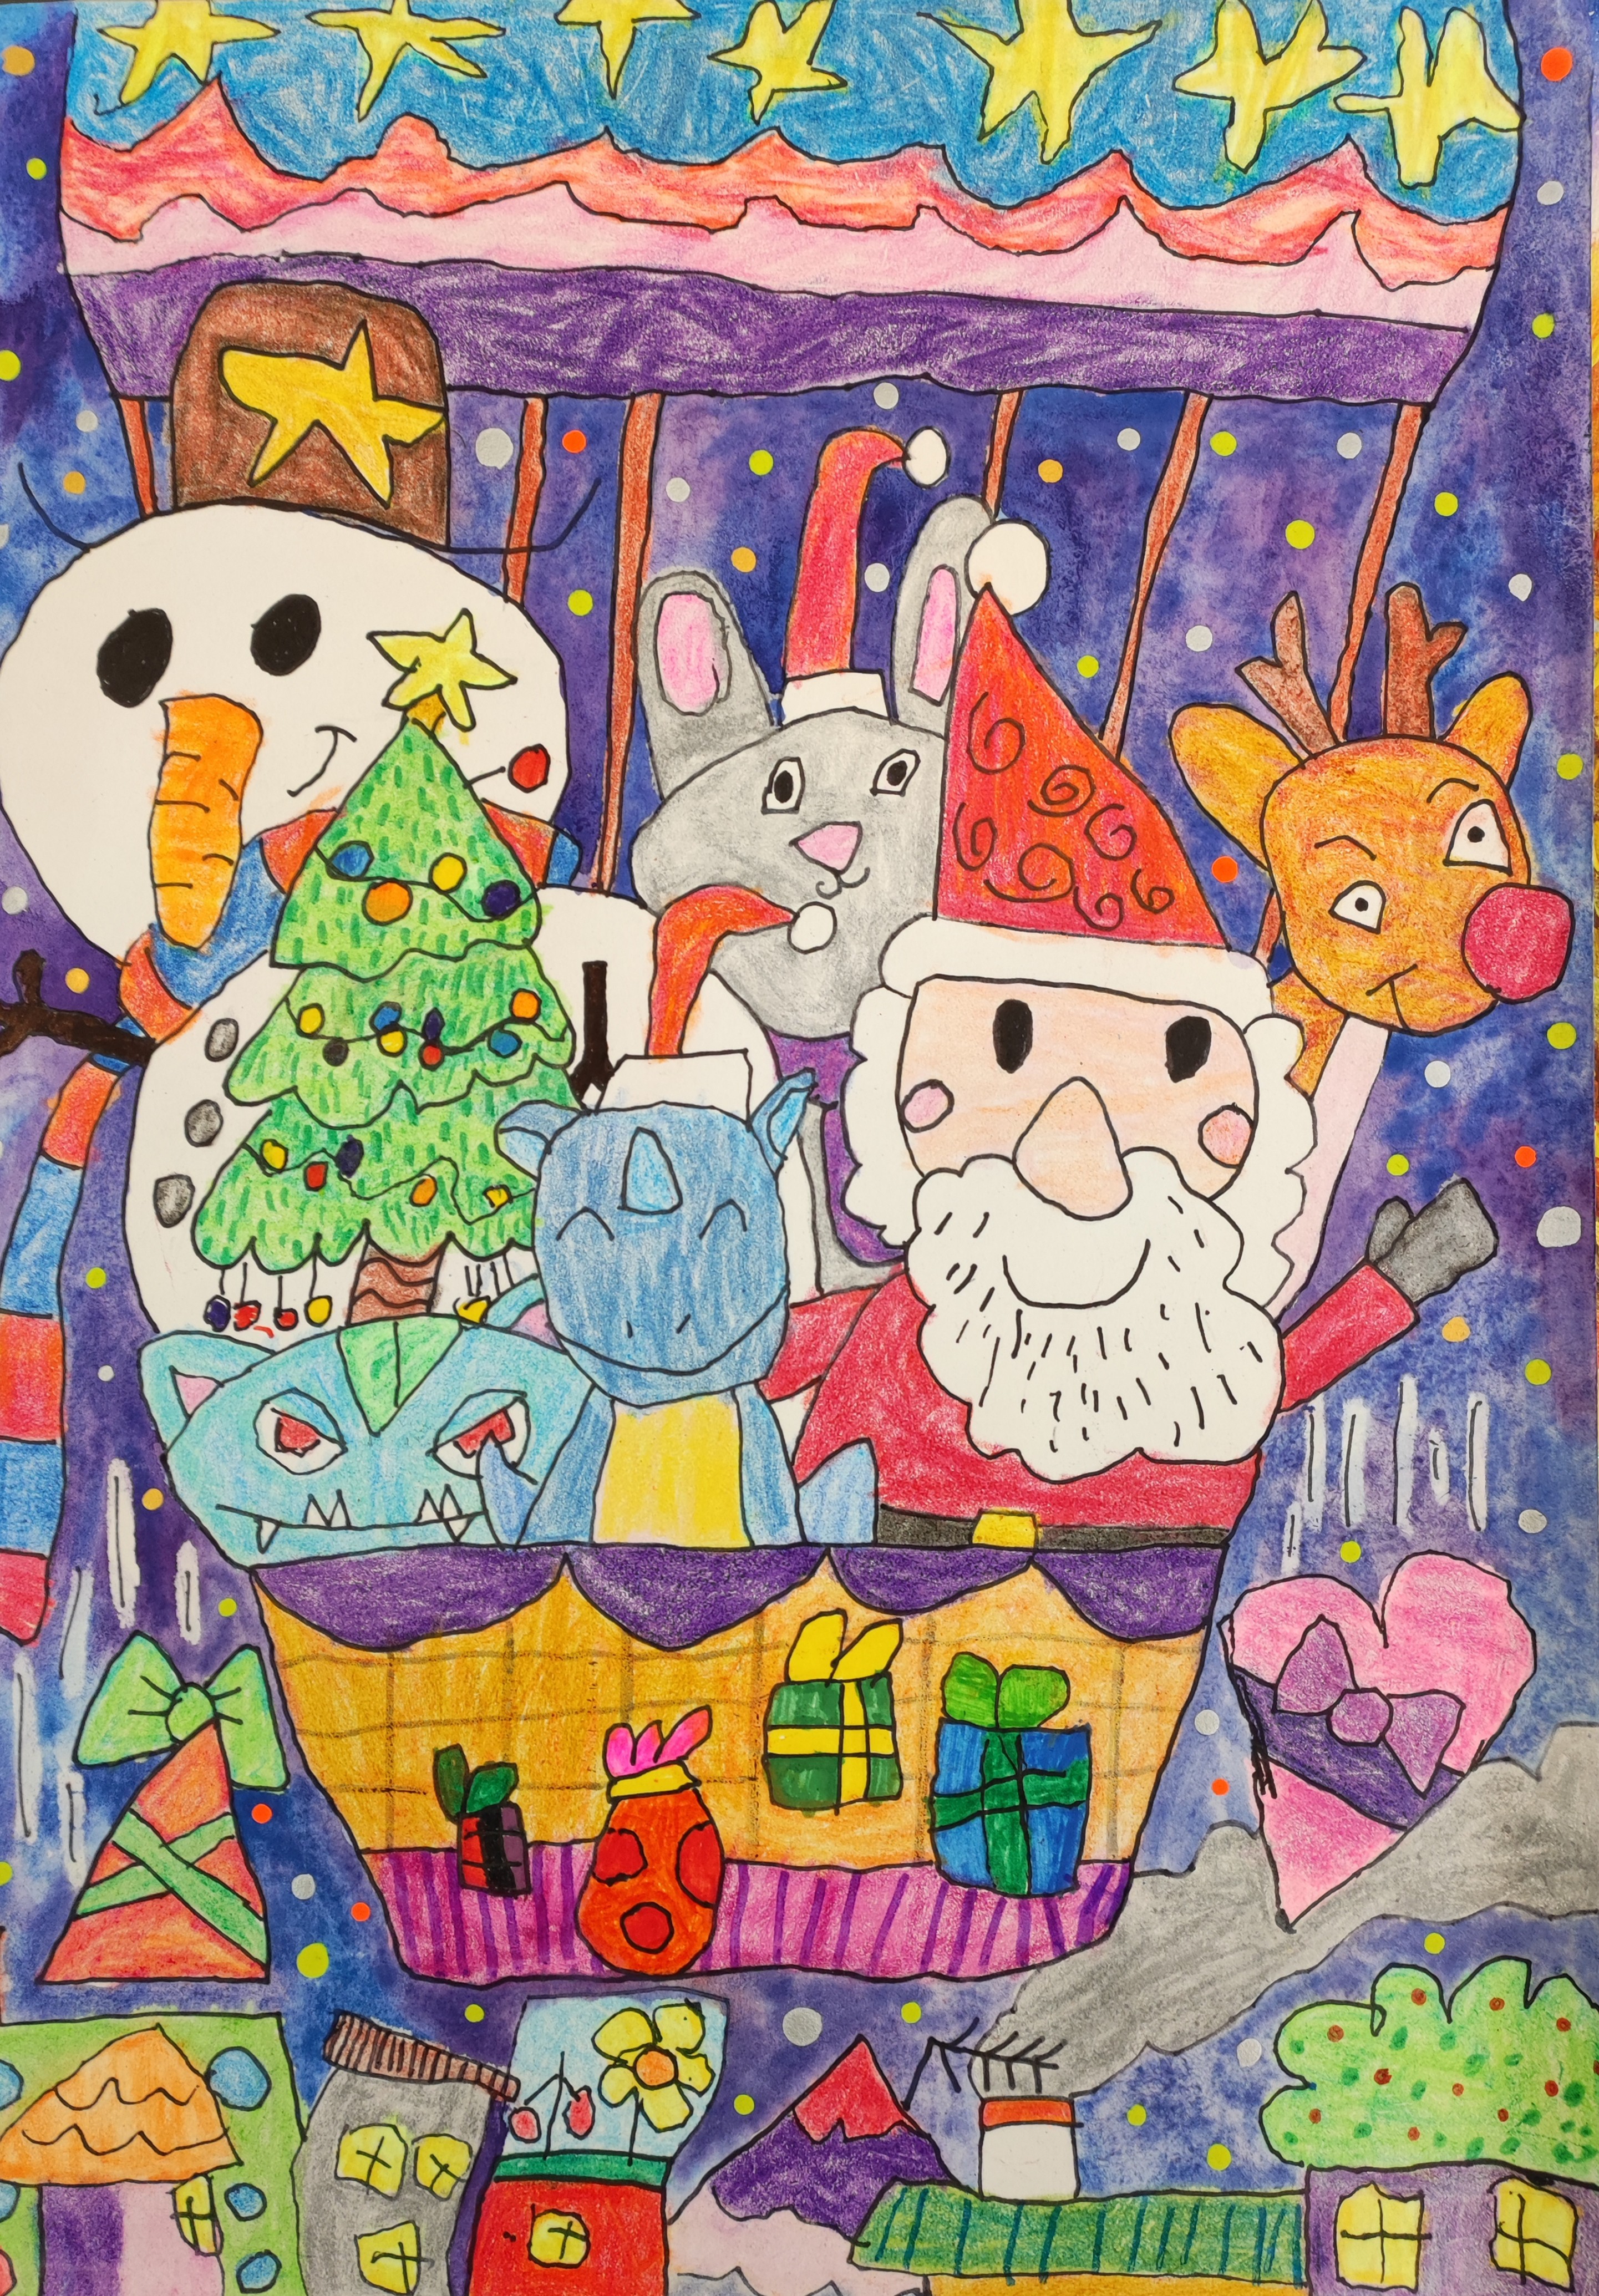 <div>繽紛聖誕-初小組-季軍-蔡樂珩</div>
<div>構圖設計豐富，色彩多元，聖誕老人帶著一眾小精靈，在熱氣球上派聖誕禮物，點子有趣有創意。</div>